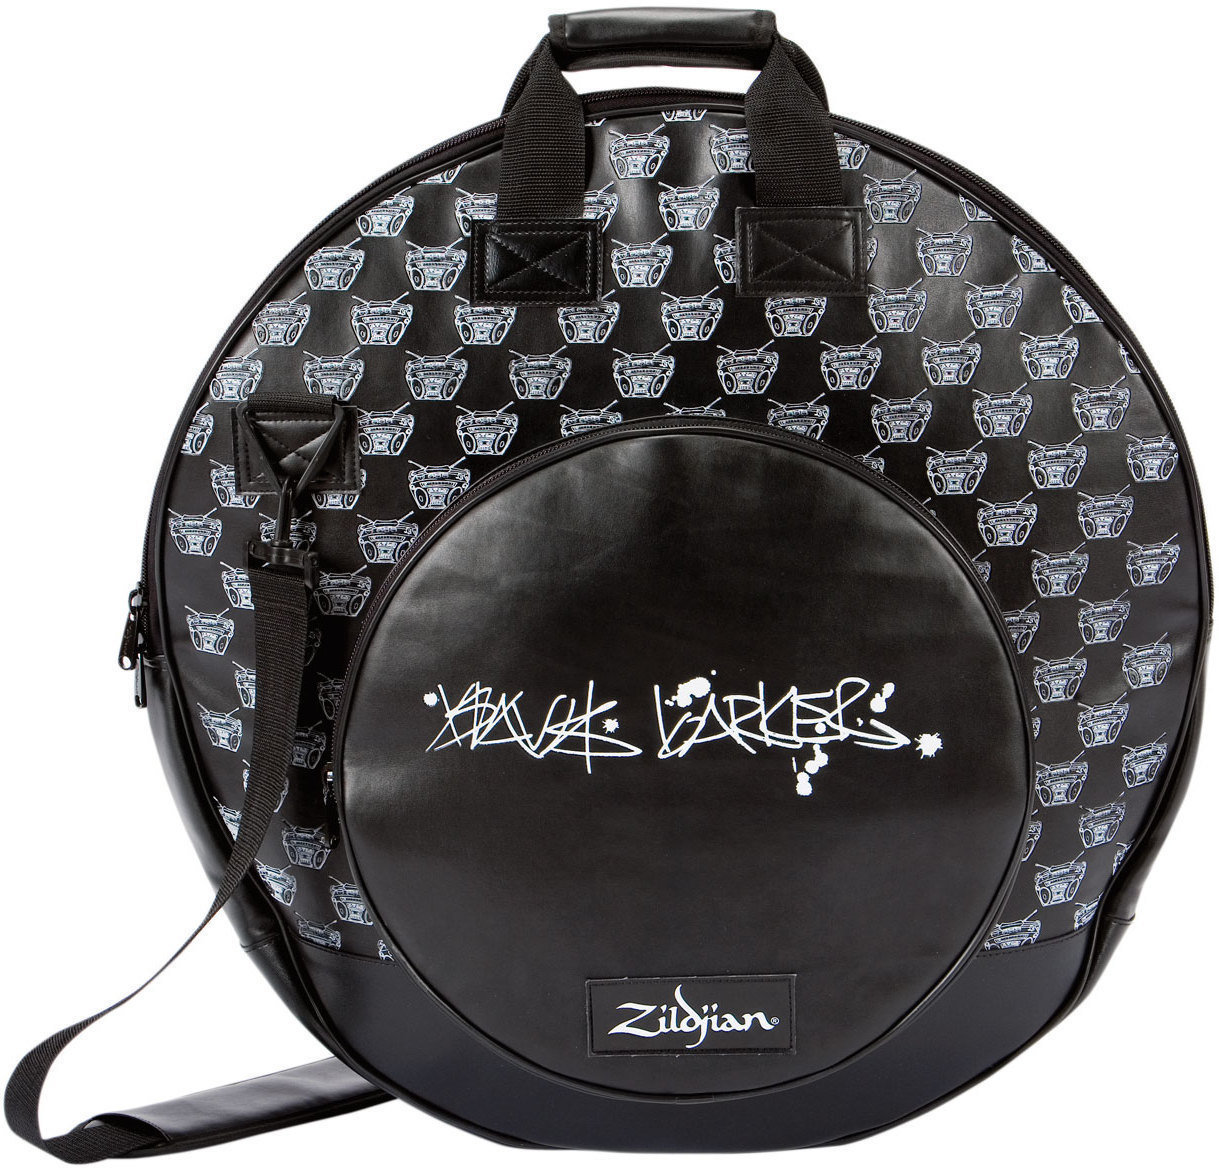 Housse pour cymbale Zildjian Travis Barker Boom Box Cymbal Bag